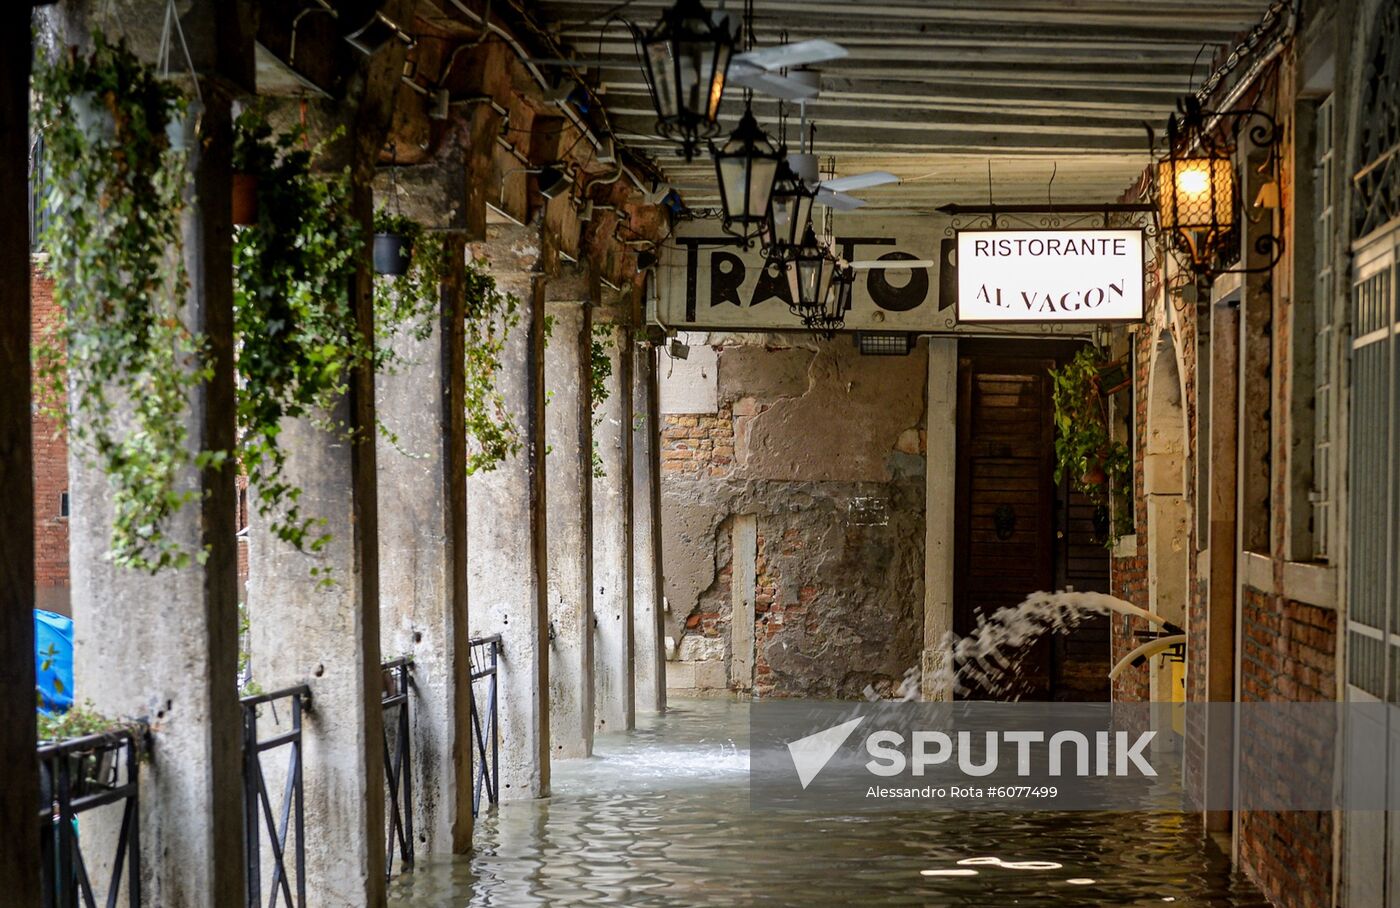 Italy Floods